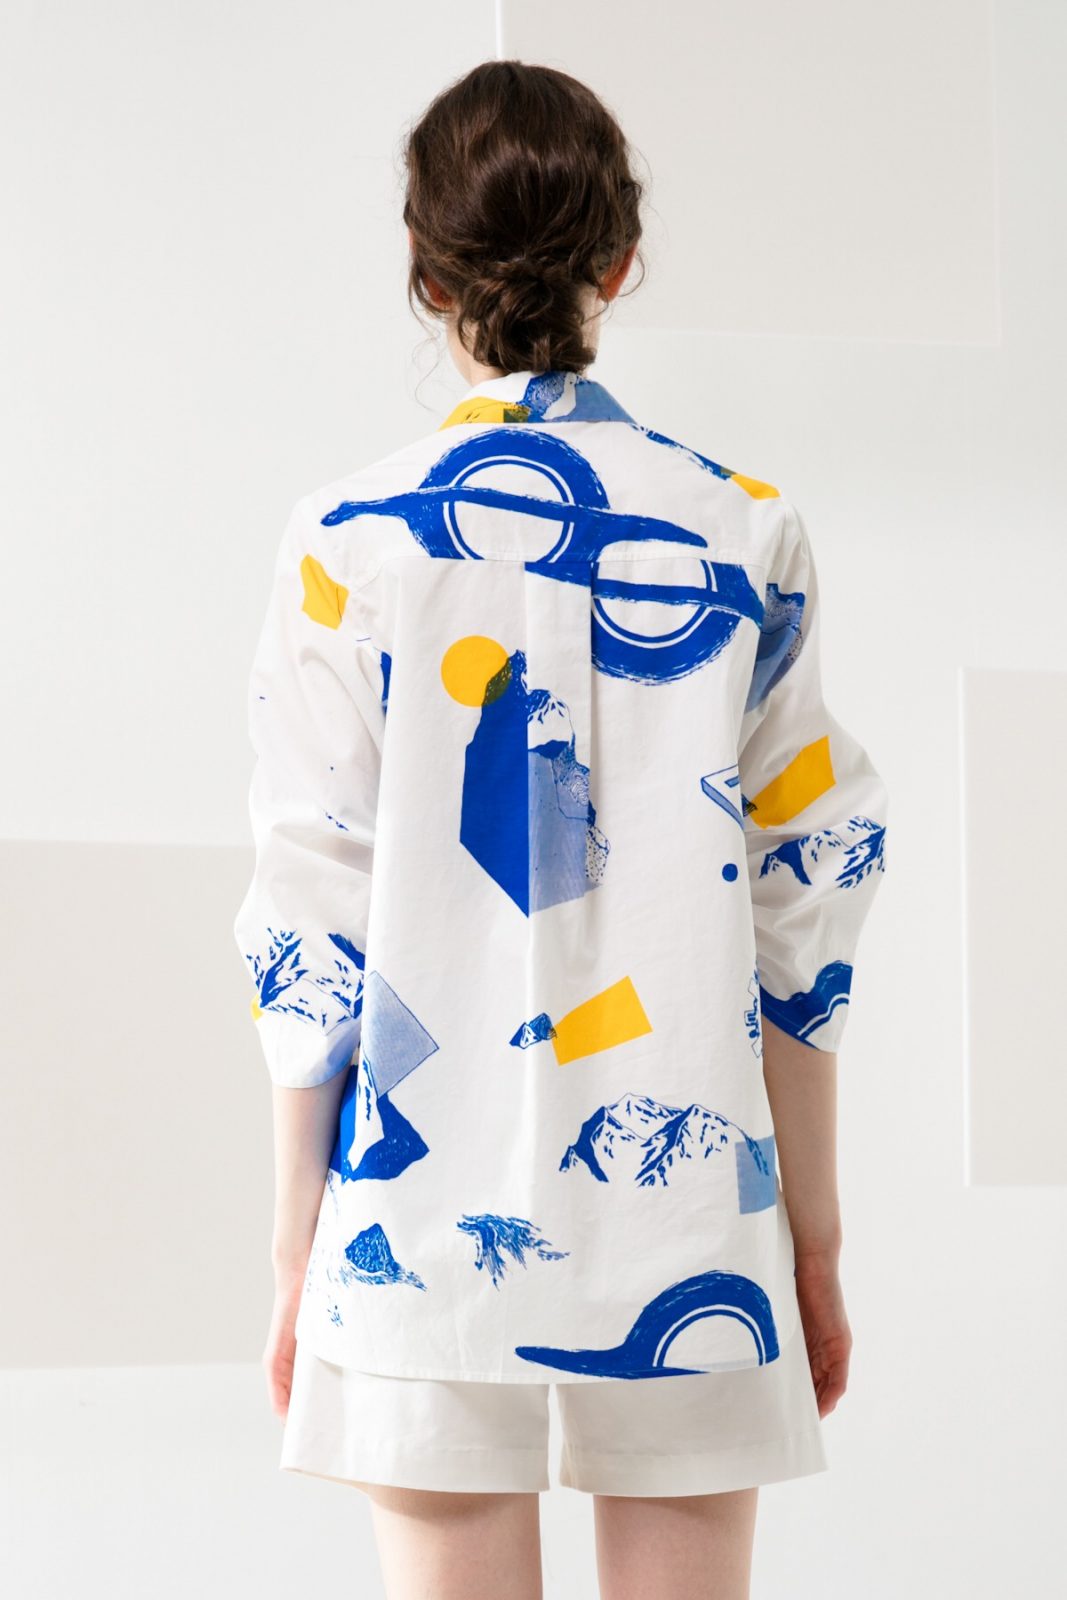 SKYE modern minimalist women clothing fashion Murphy 3:4 sleeve shirt interstellar 4